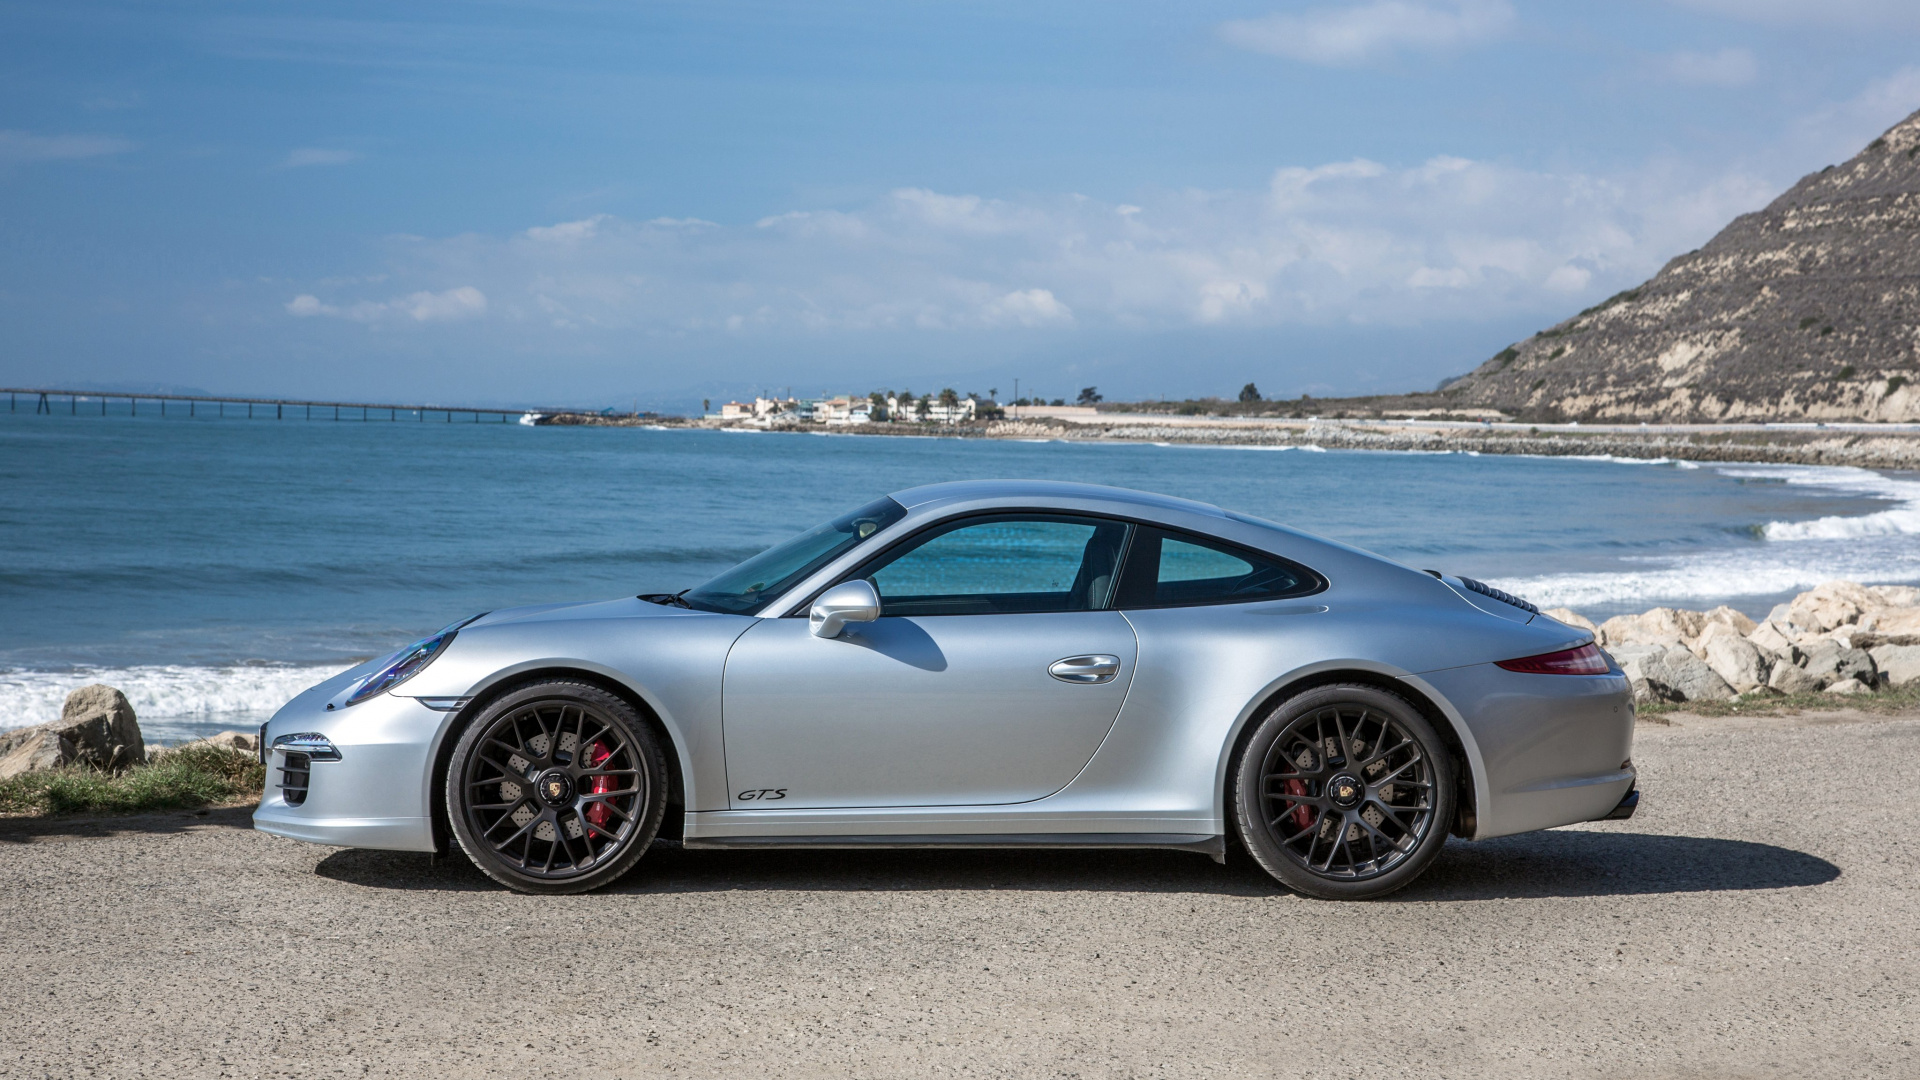 Silver Porsche 911 Parked on Seashore During Daytime. Wallpaper in 1920x1080 Resolution